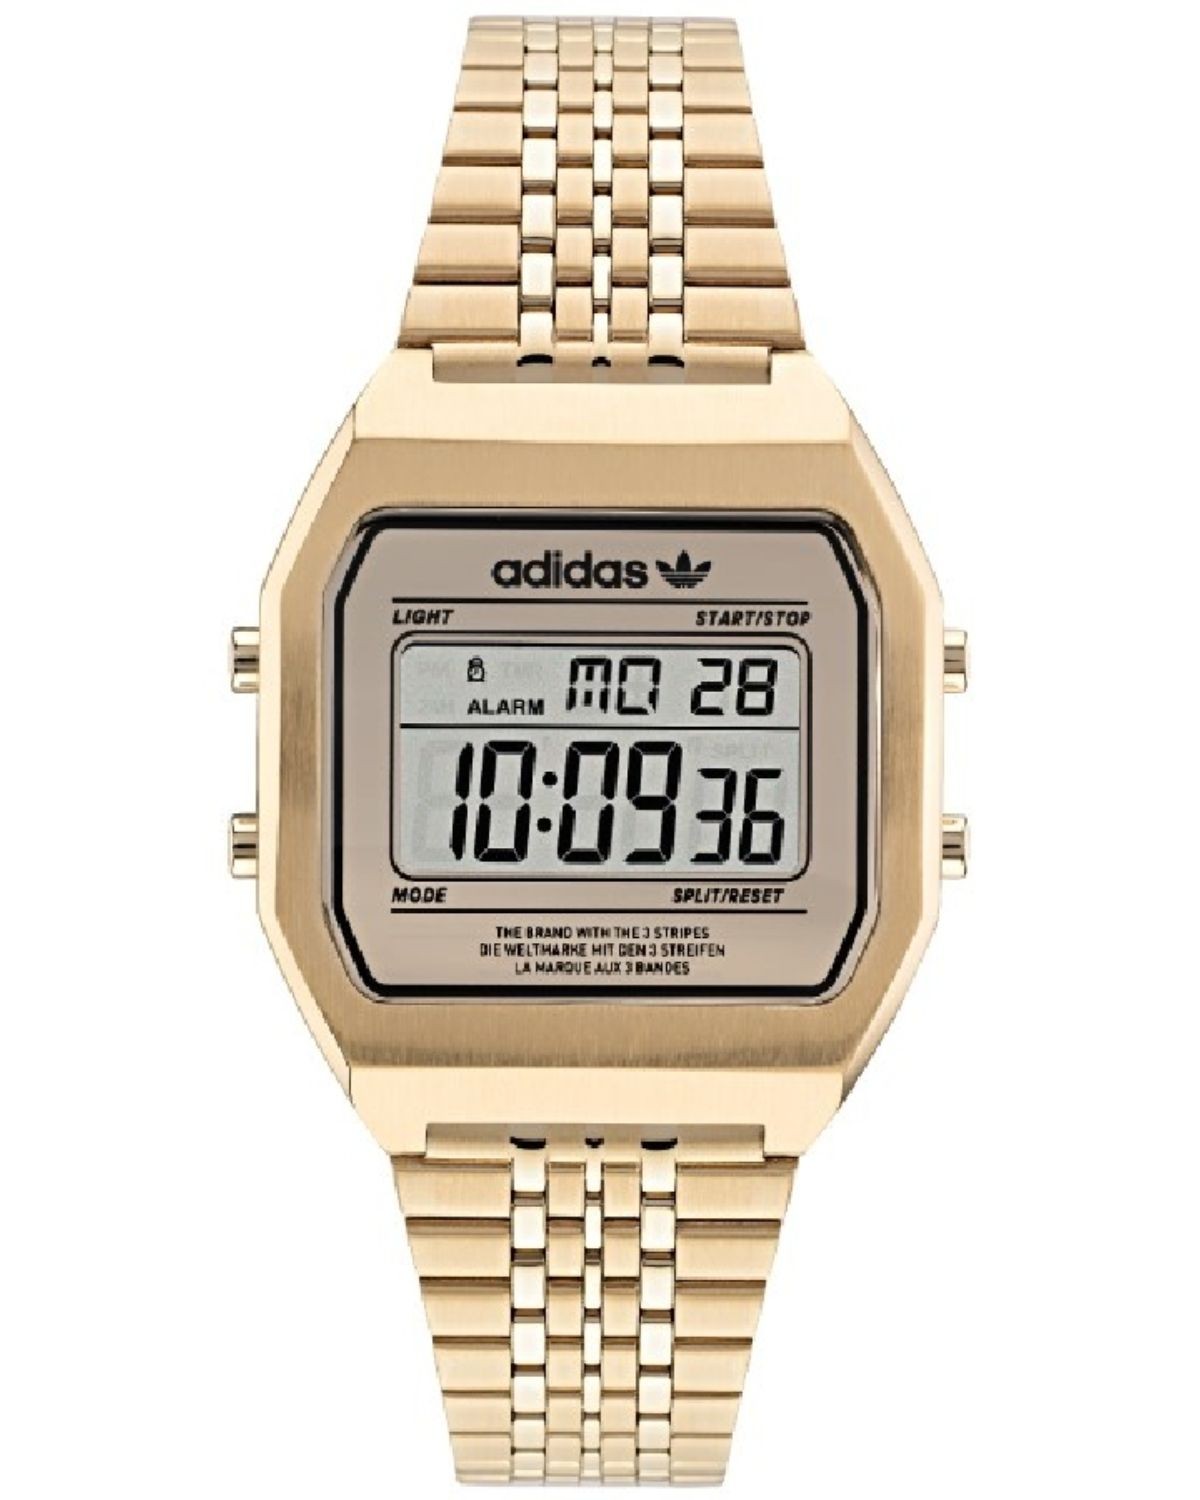 Adidas Originals Men\'s Watch men\'s watch gold Two Clicktime.eu» Comprar Two Comprar watch | Digital men\'s Digital stainless-steel Adidas Barato AOST22074 gold Adidas Watch in | in online stainless-steel